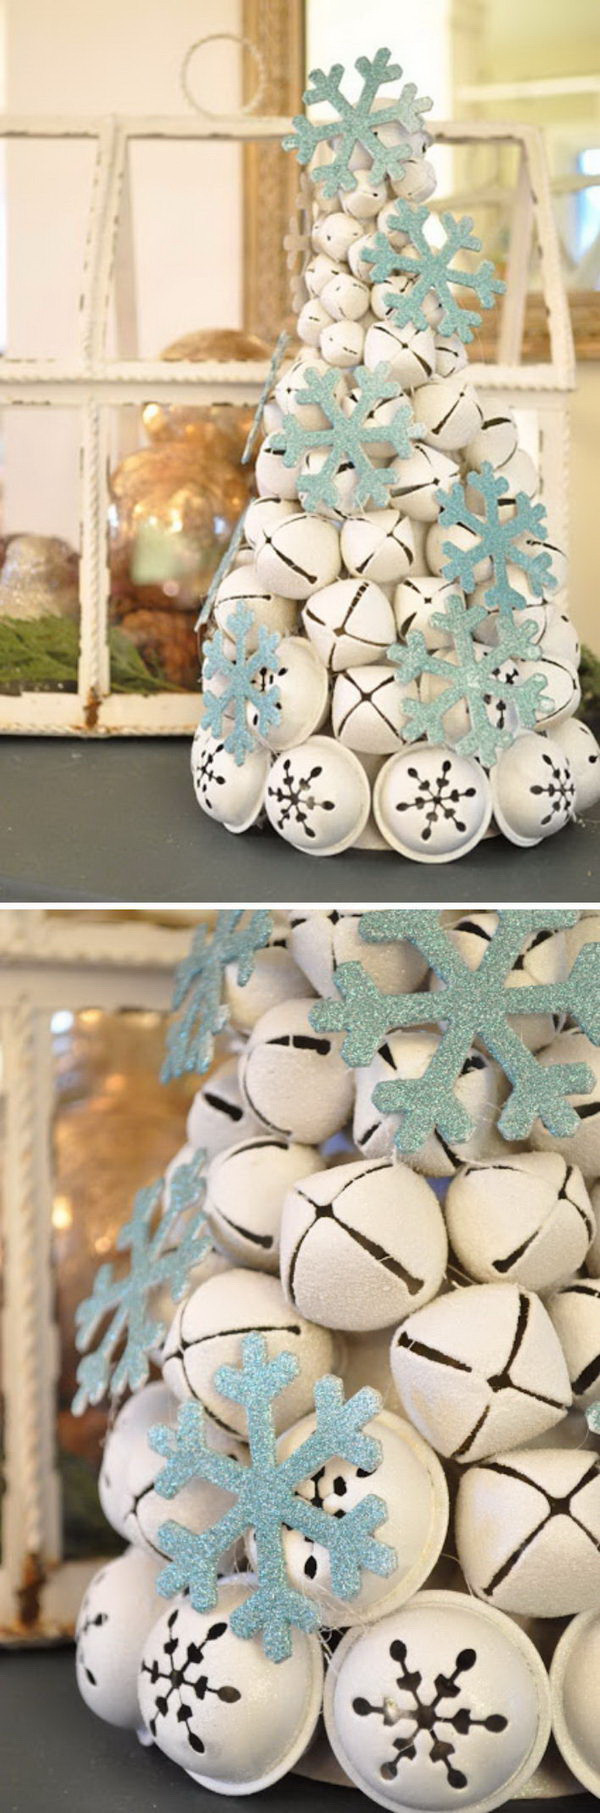 DIY Christmas Tree Decorations Ideas
 55 Rustic Farmhouse Inspired DIY Christmas Decoration